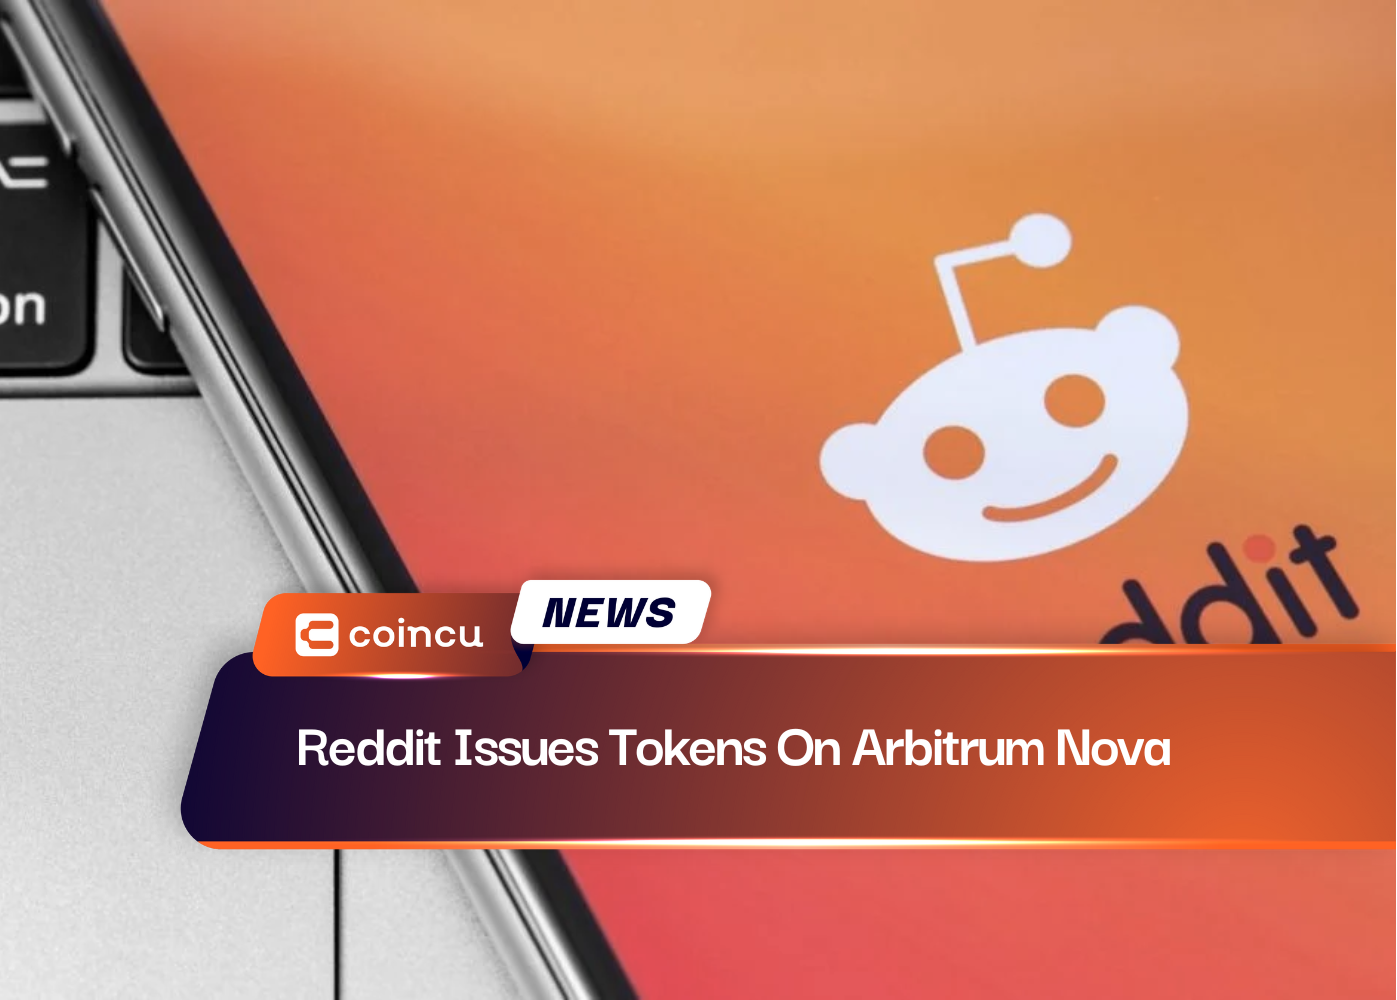 Reddit Issues Tokens On Arbitrum Nova